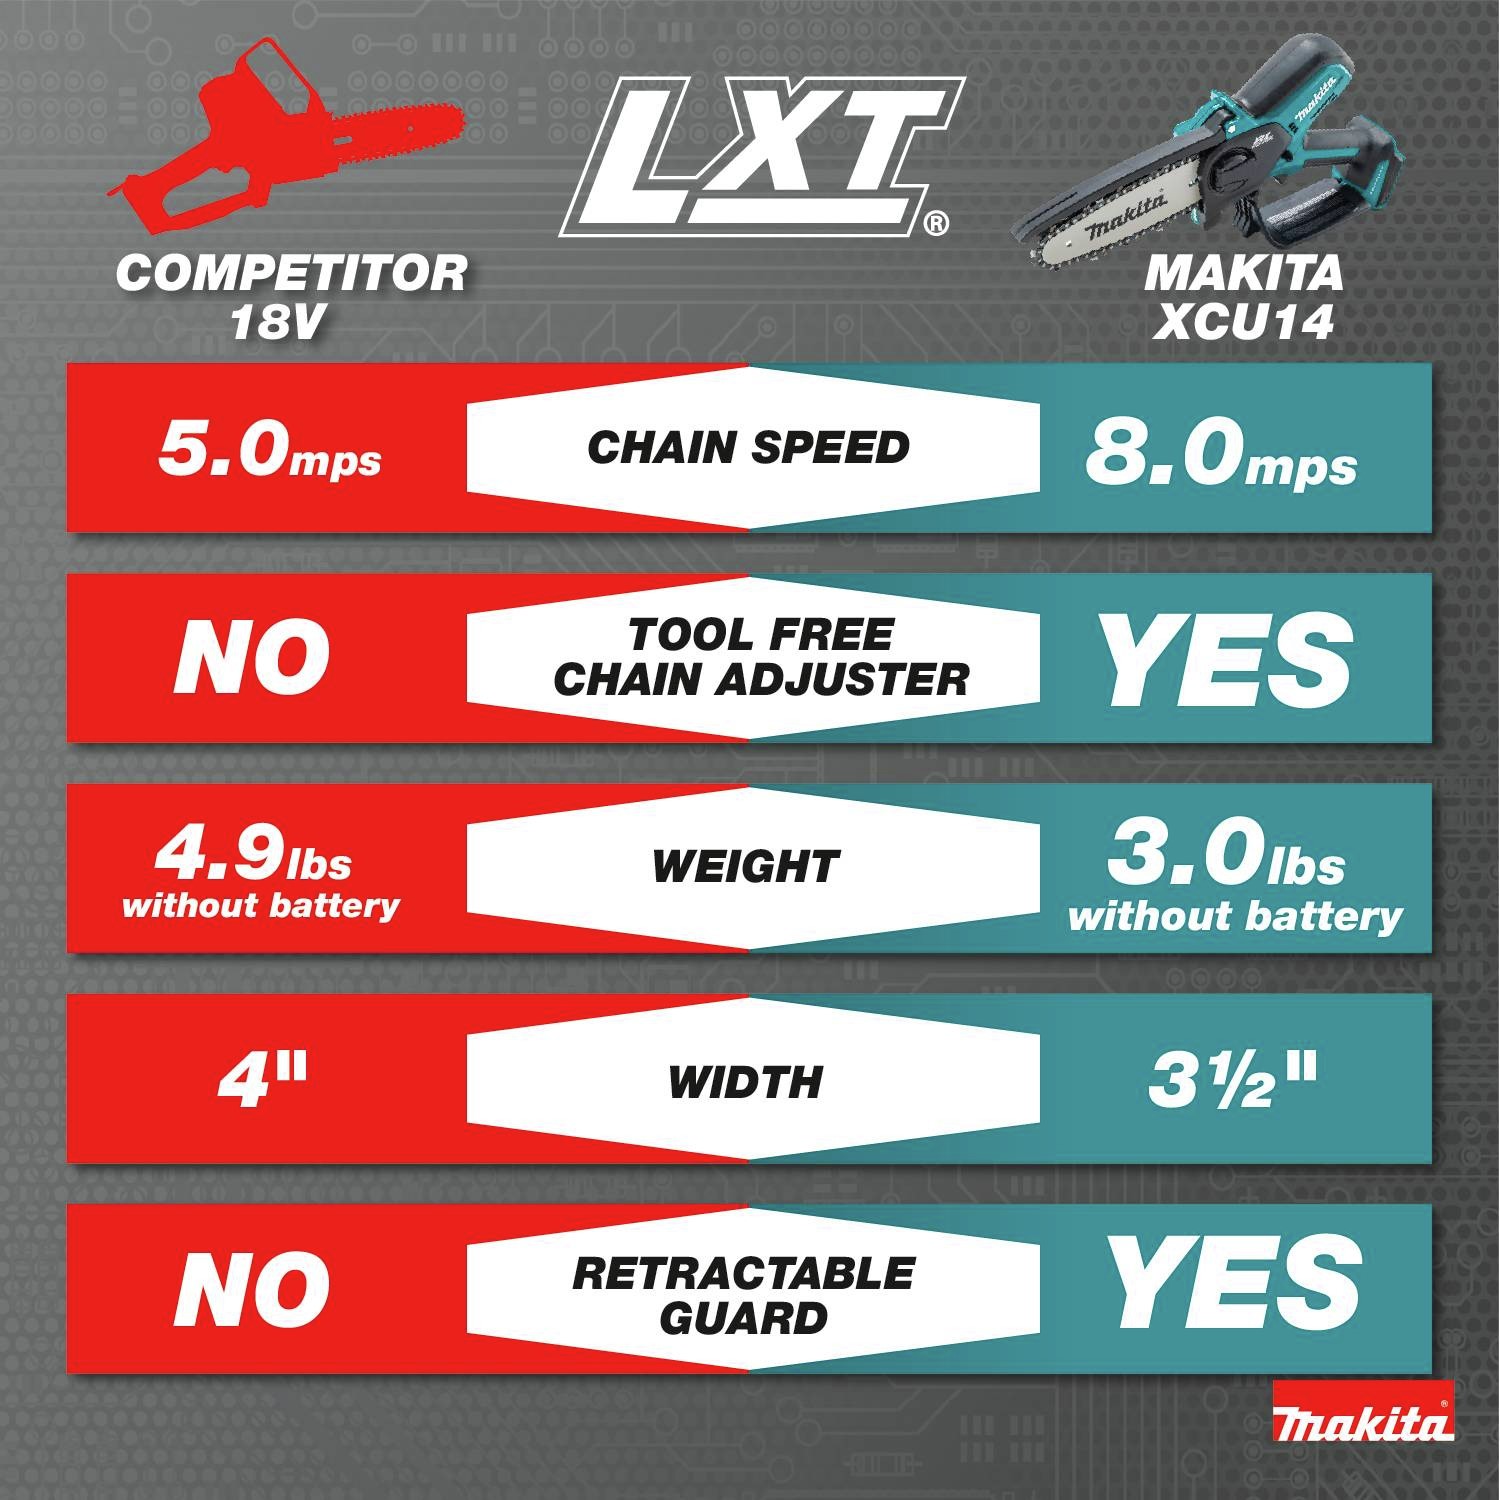 Competitor 18V vs Makita XCU14